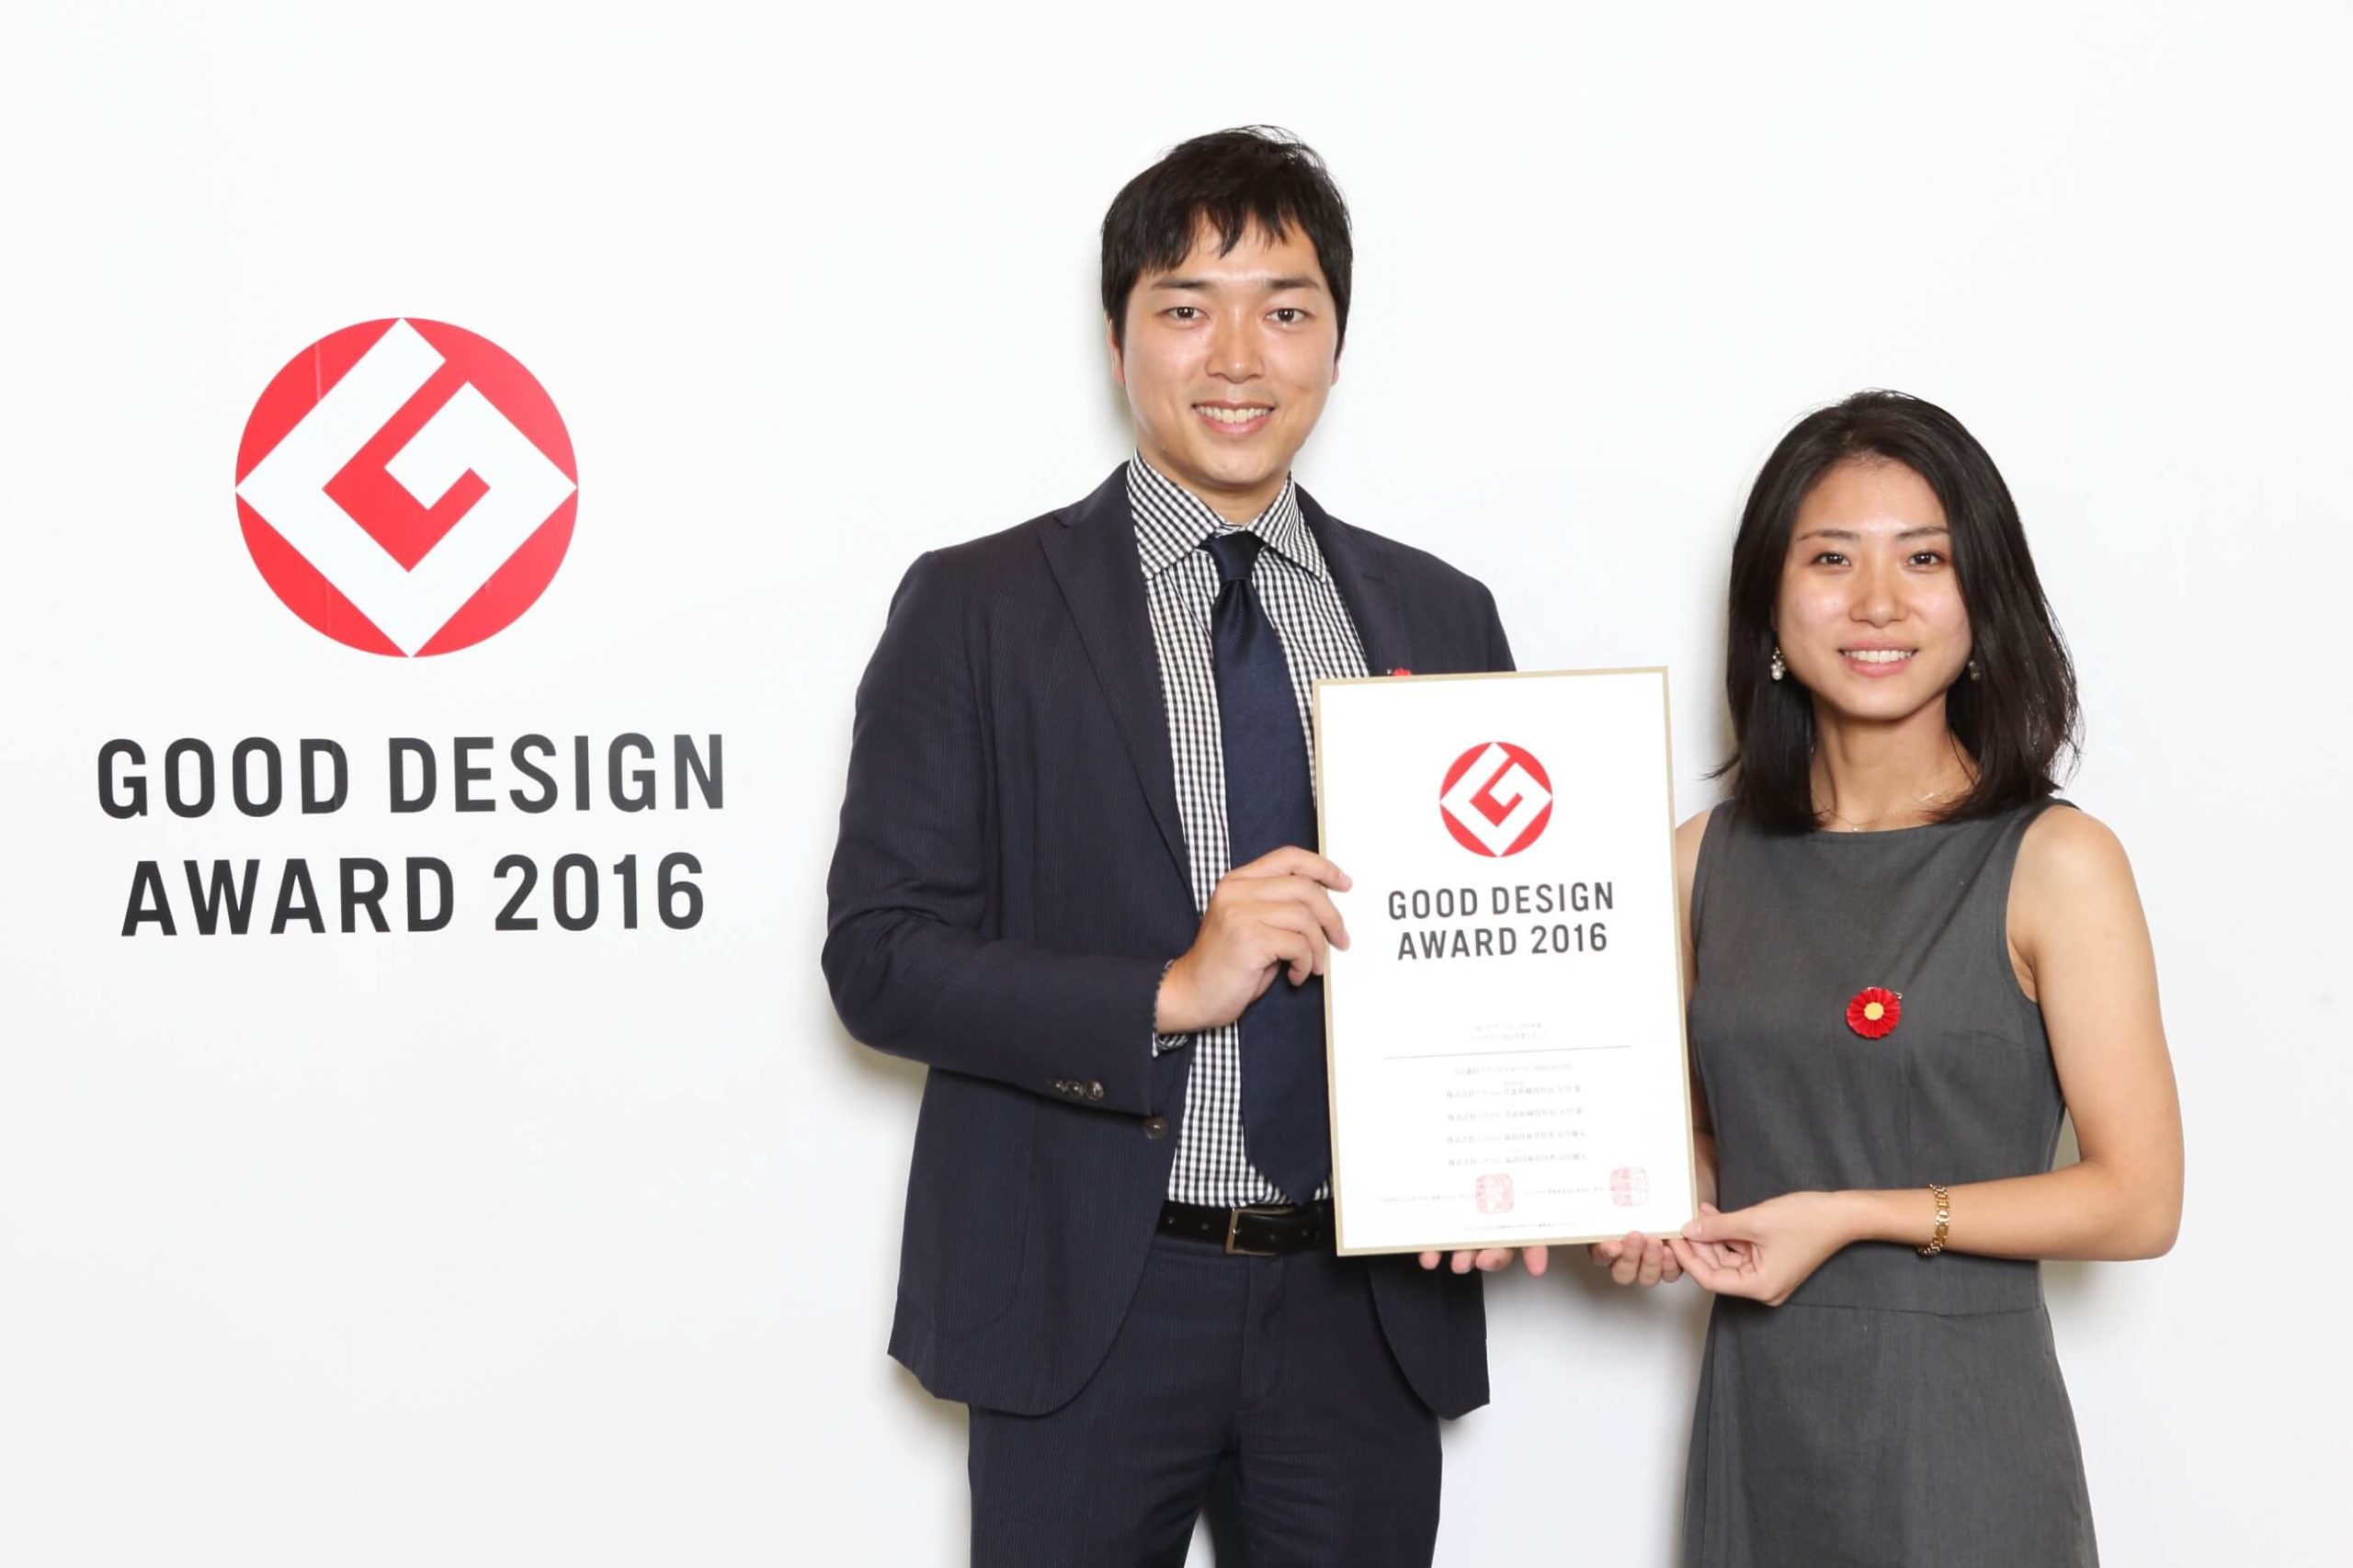 Soracom Wins Good Design Award 2016